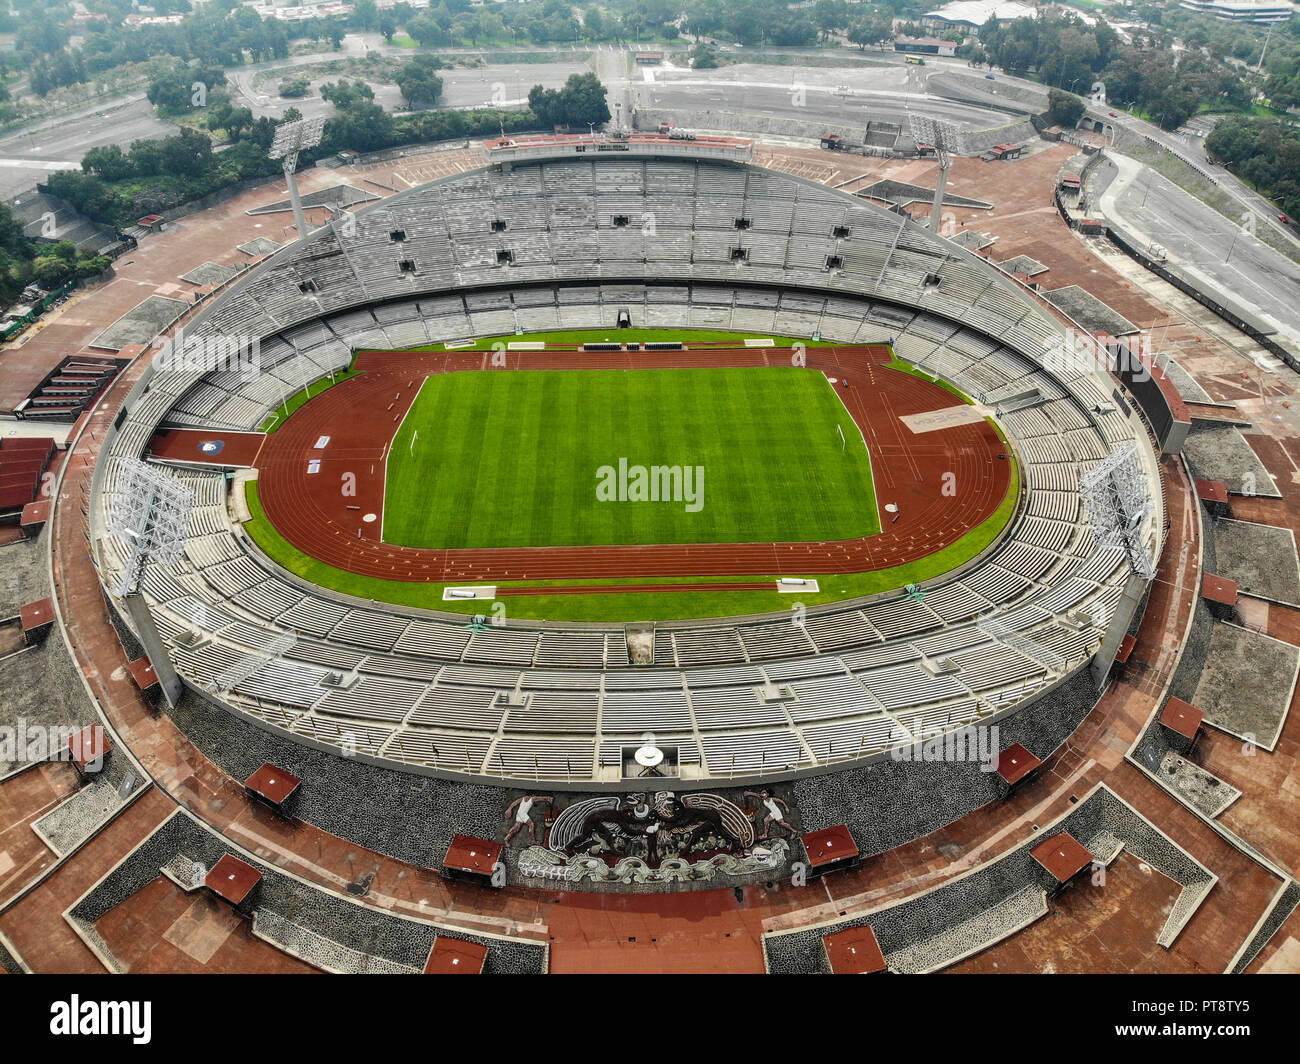 Estadio olimpico universitario universidad estadio olímpico e imágenes de - Alamy